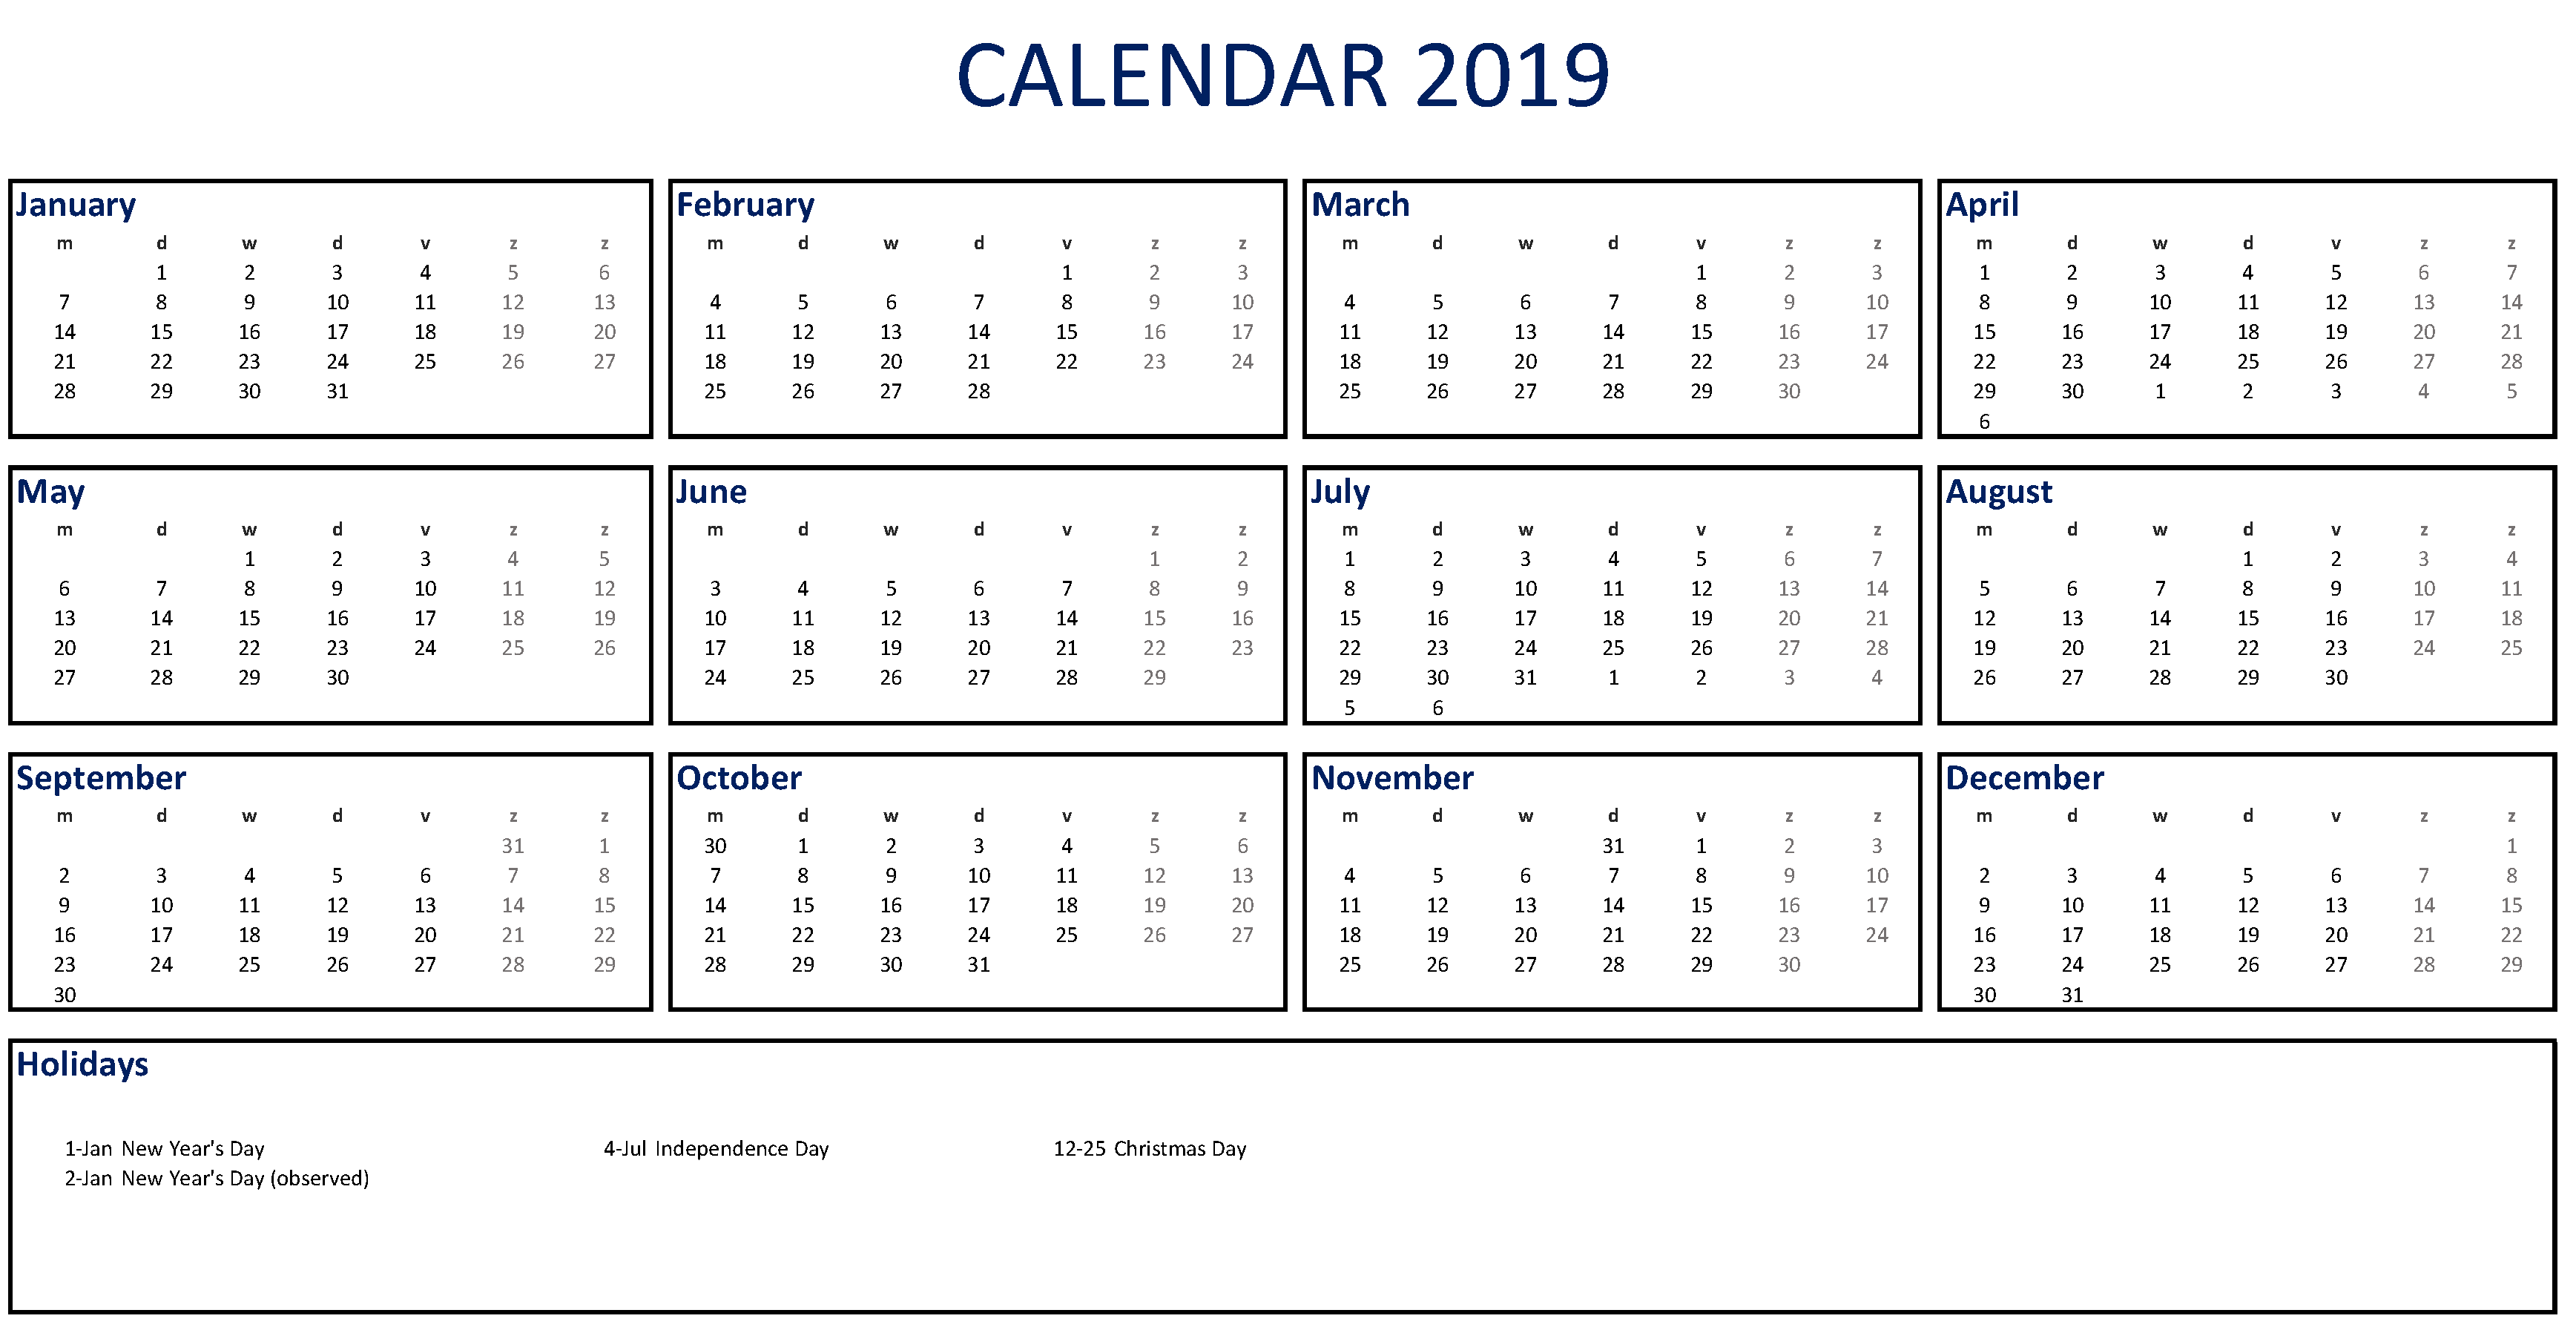 Calendar 2019 template main image